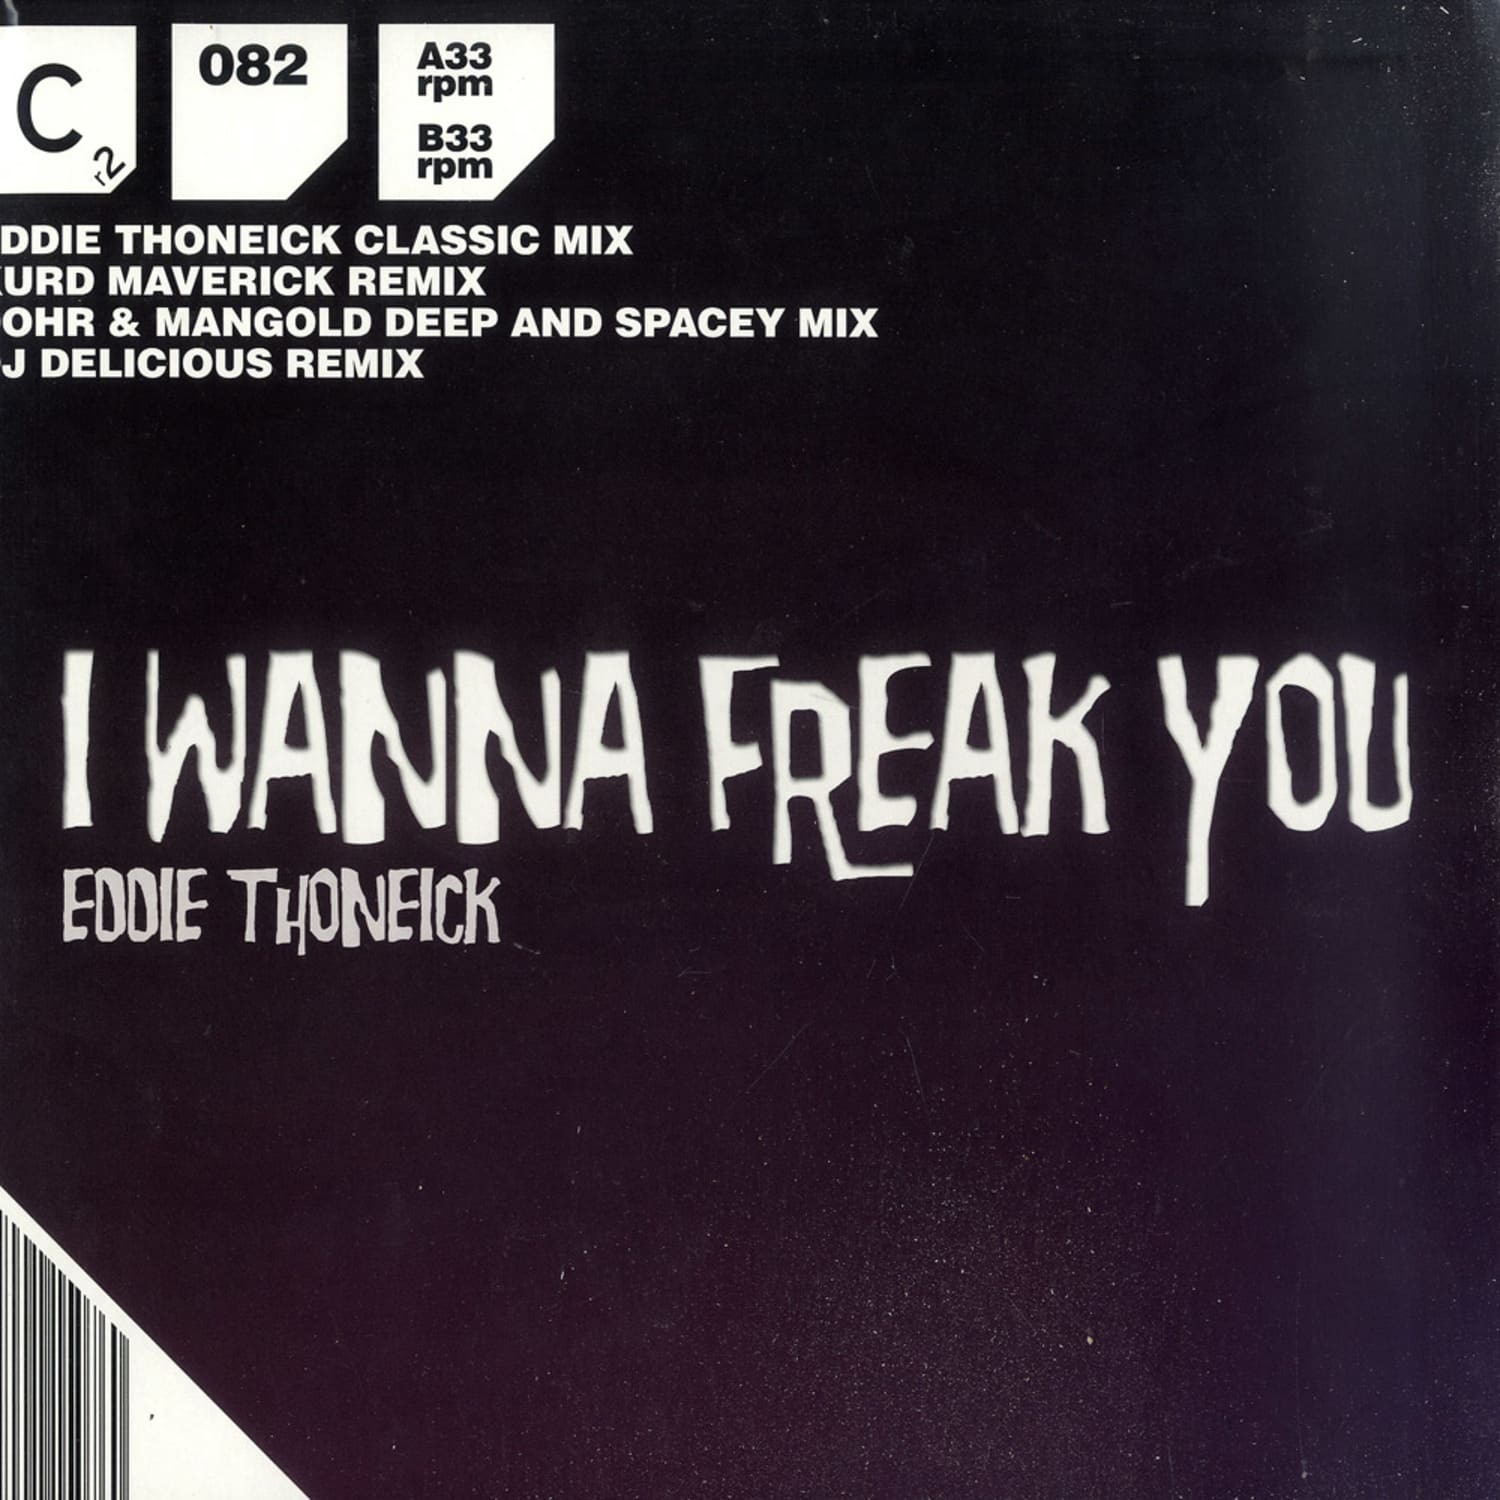 Eddie Thoneick - I WANNA FREAK YOU